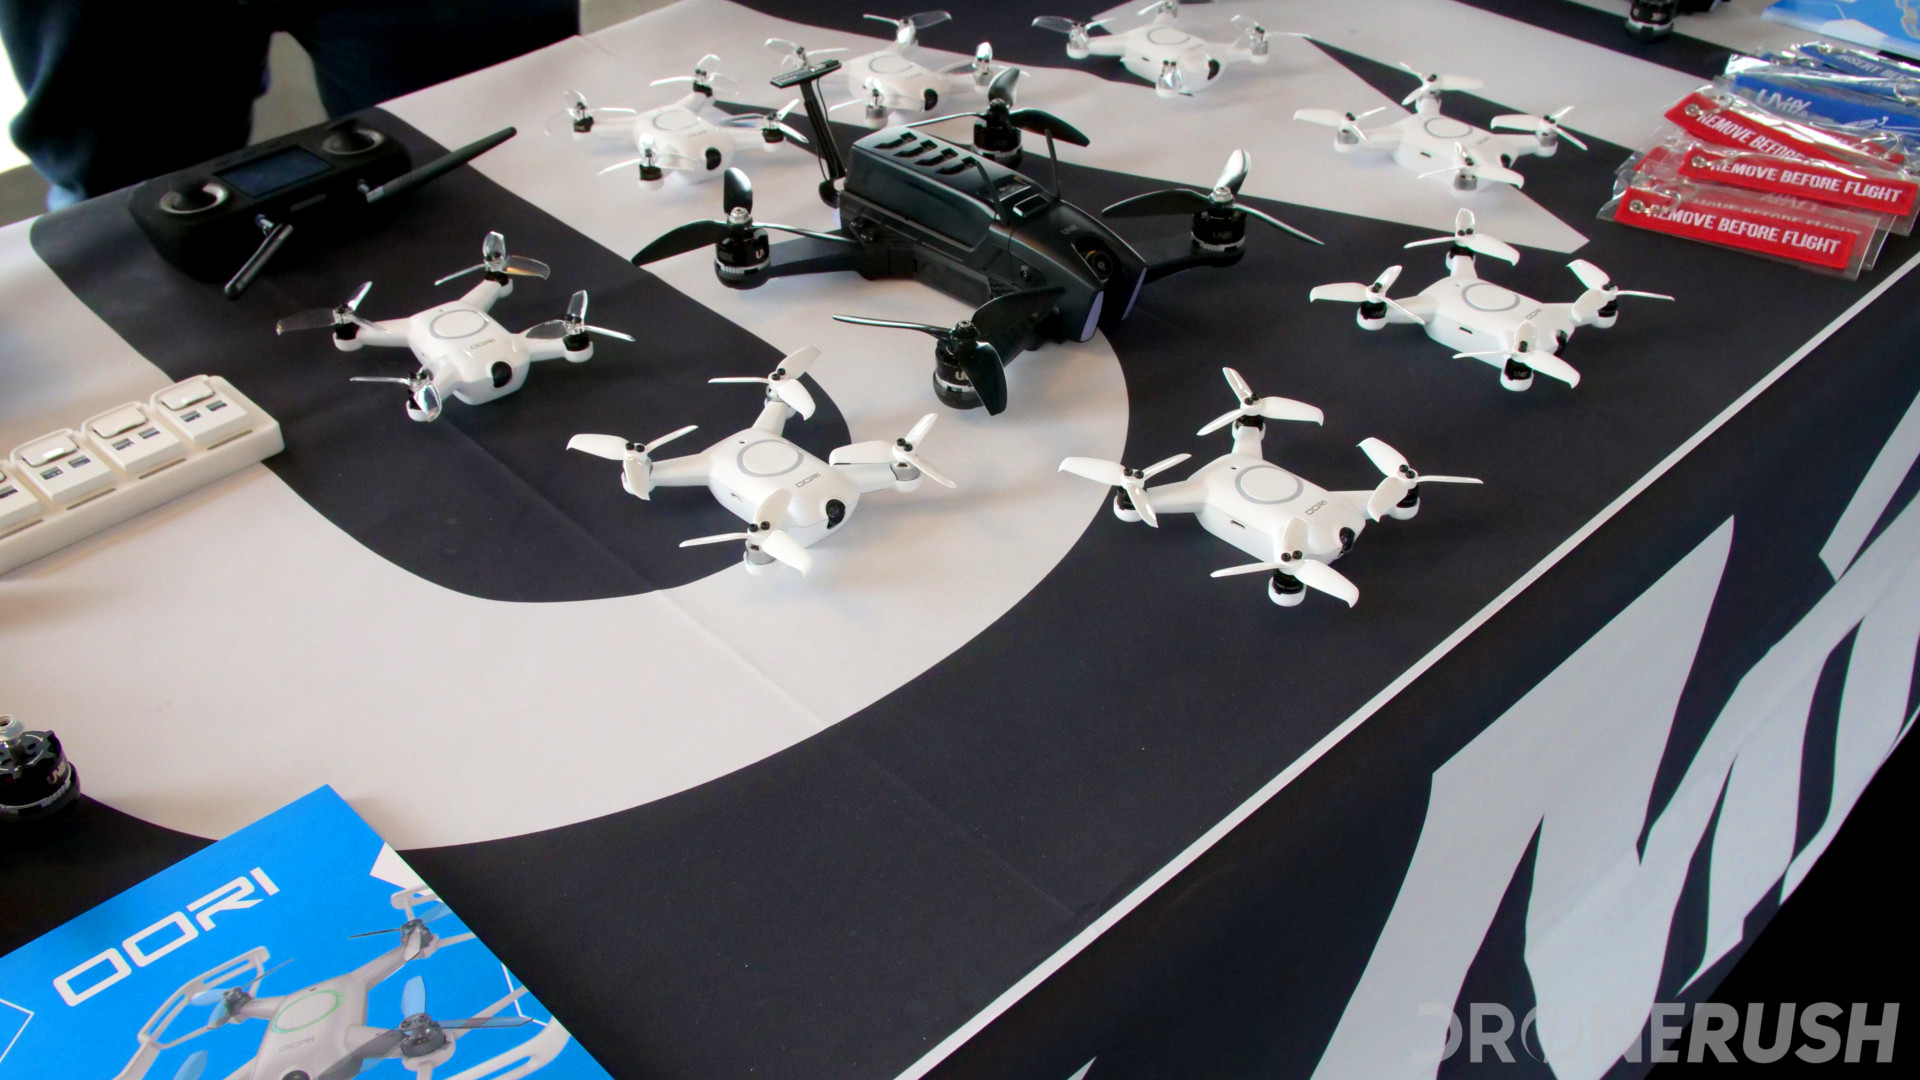 Meet UVify's OOri, The World's Fastest Micro Drone